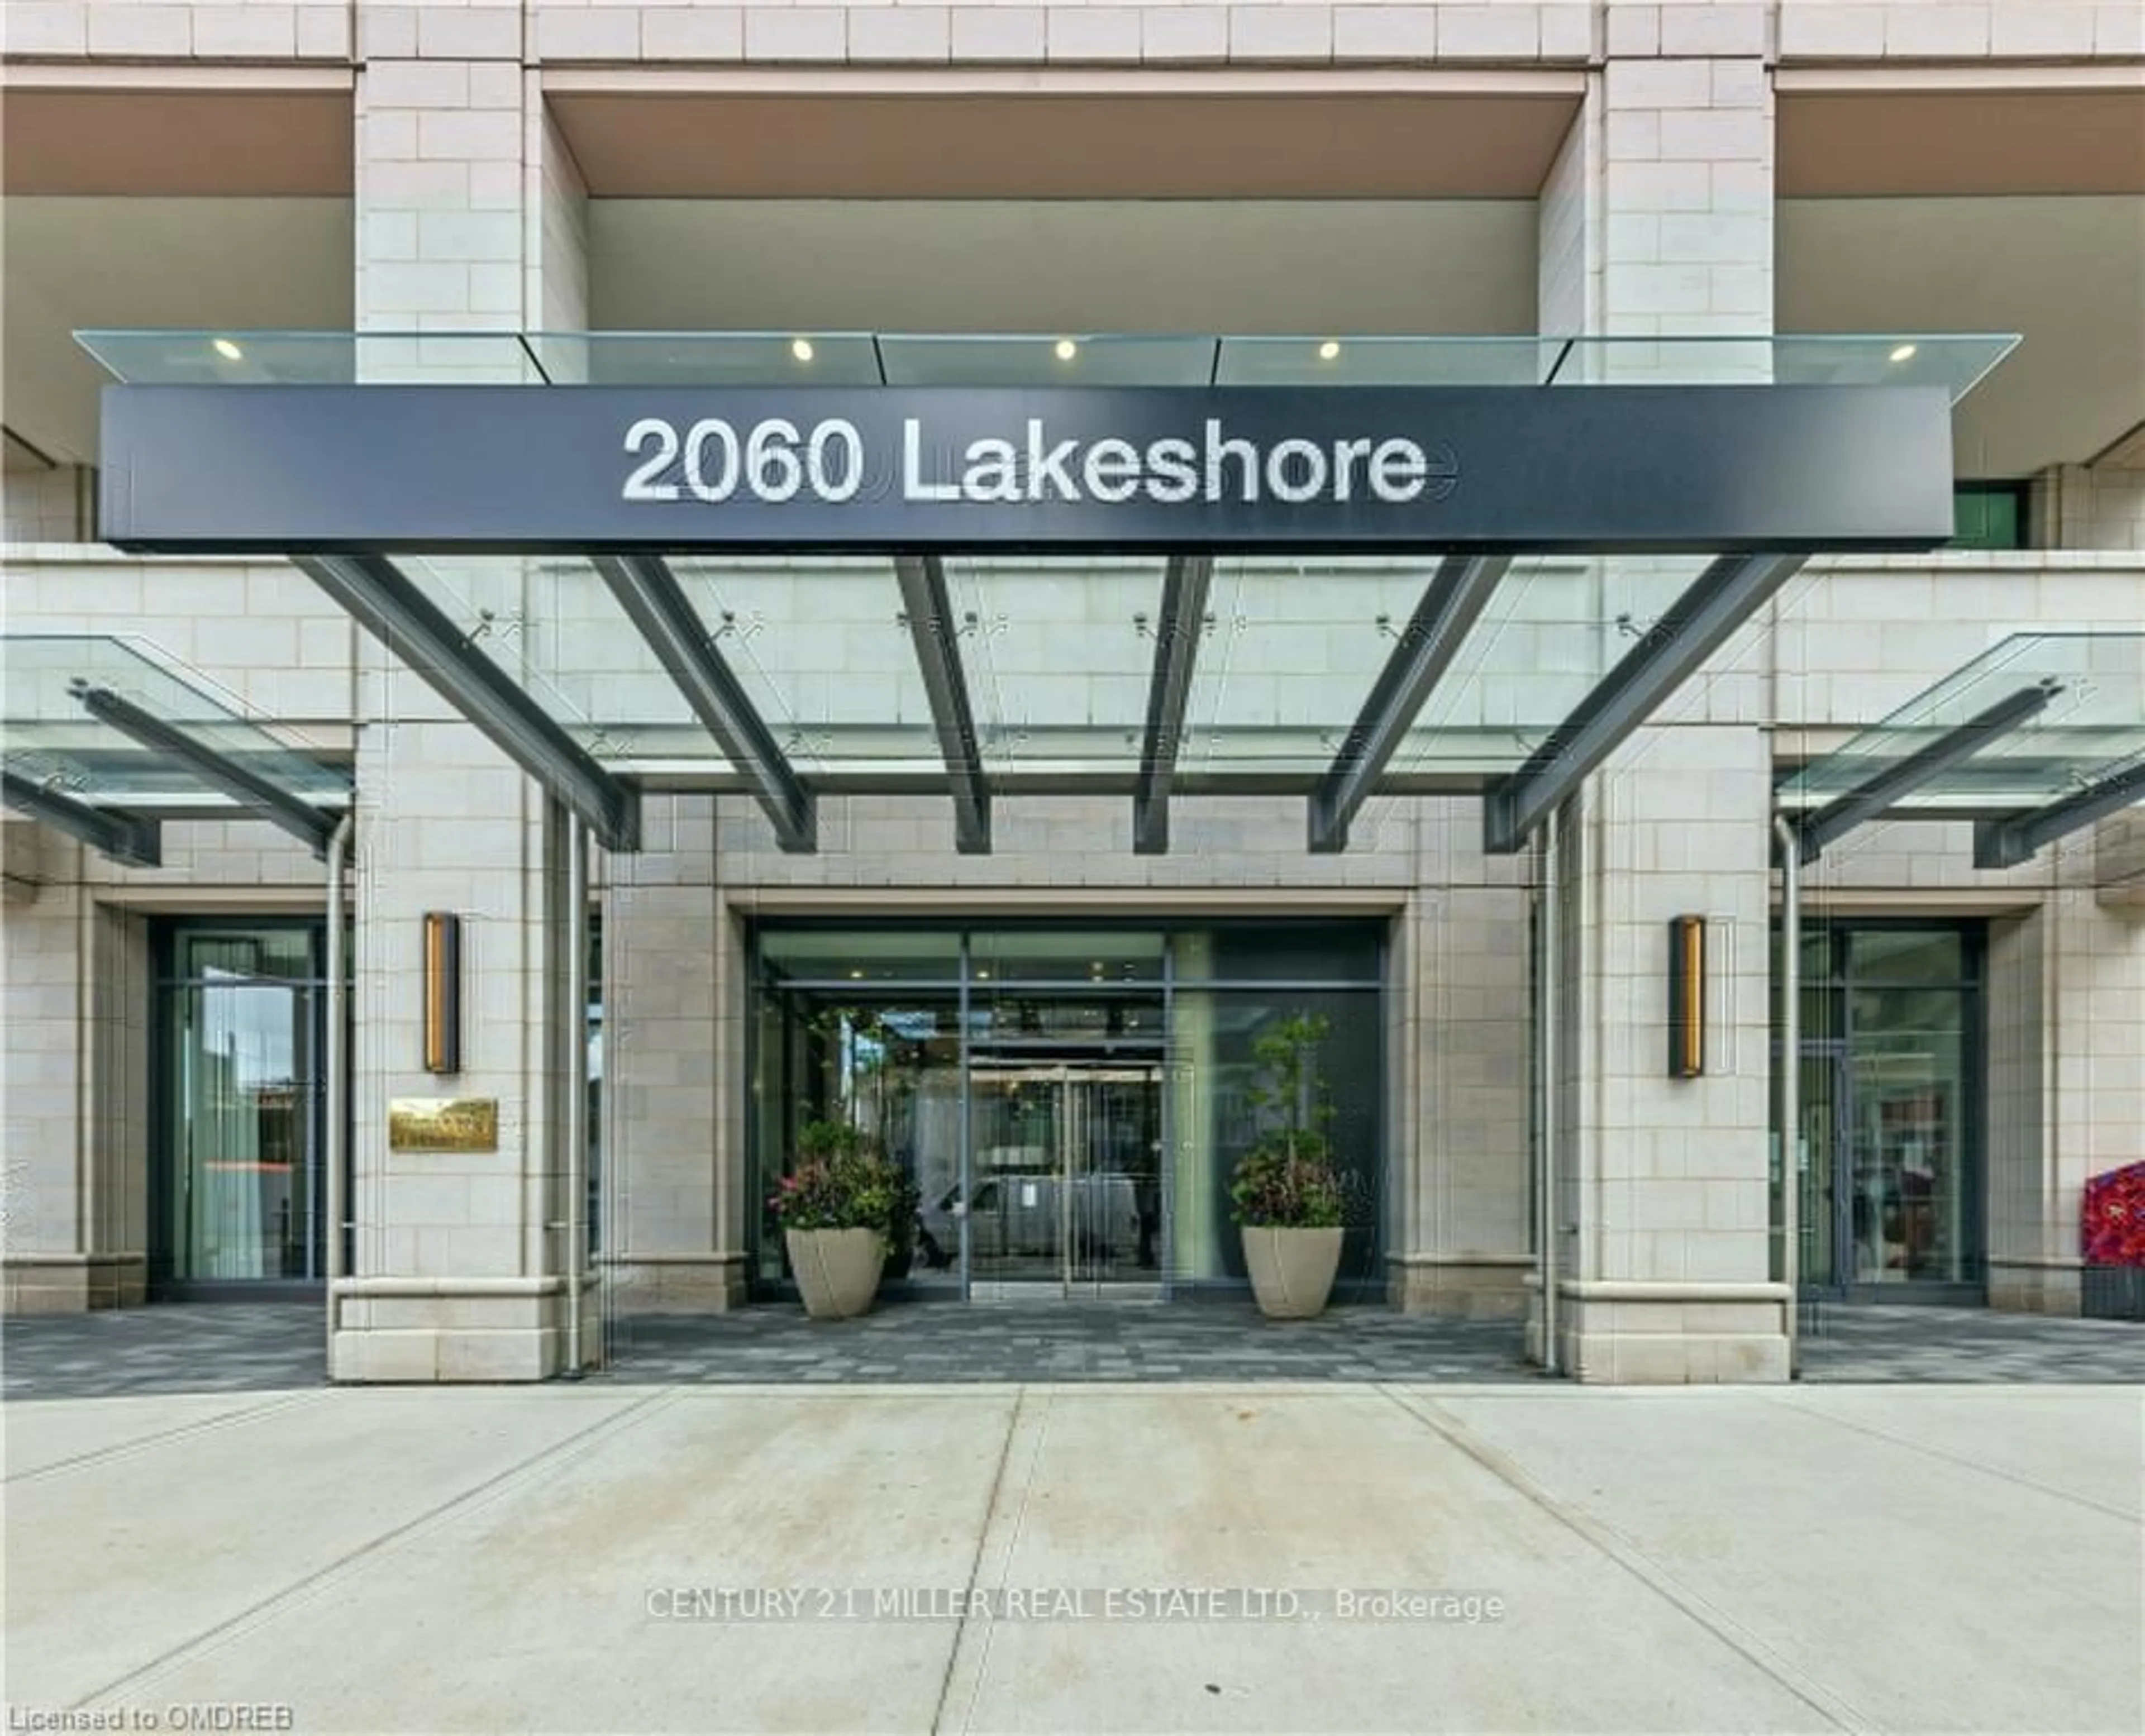 Lakeview for 2060 Lakeshore Rd #1504, Burlington Ontario L7R 0G2